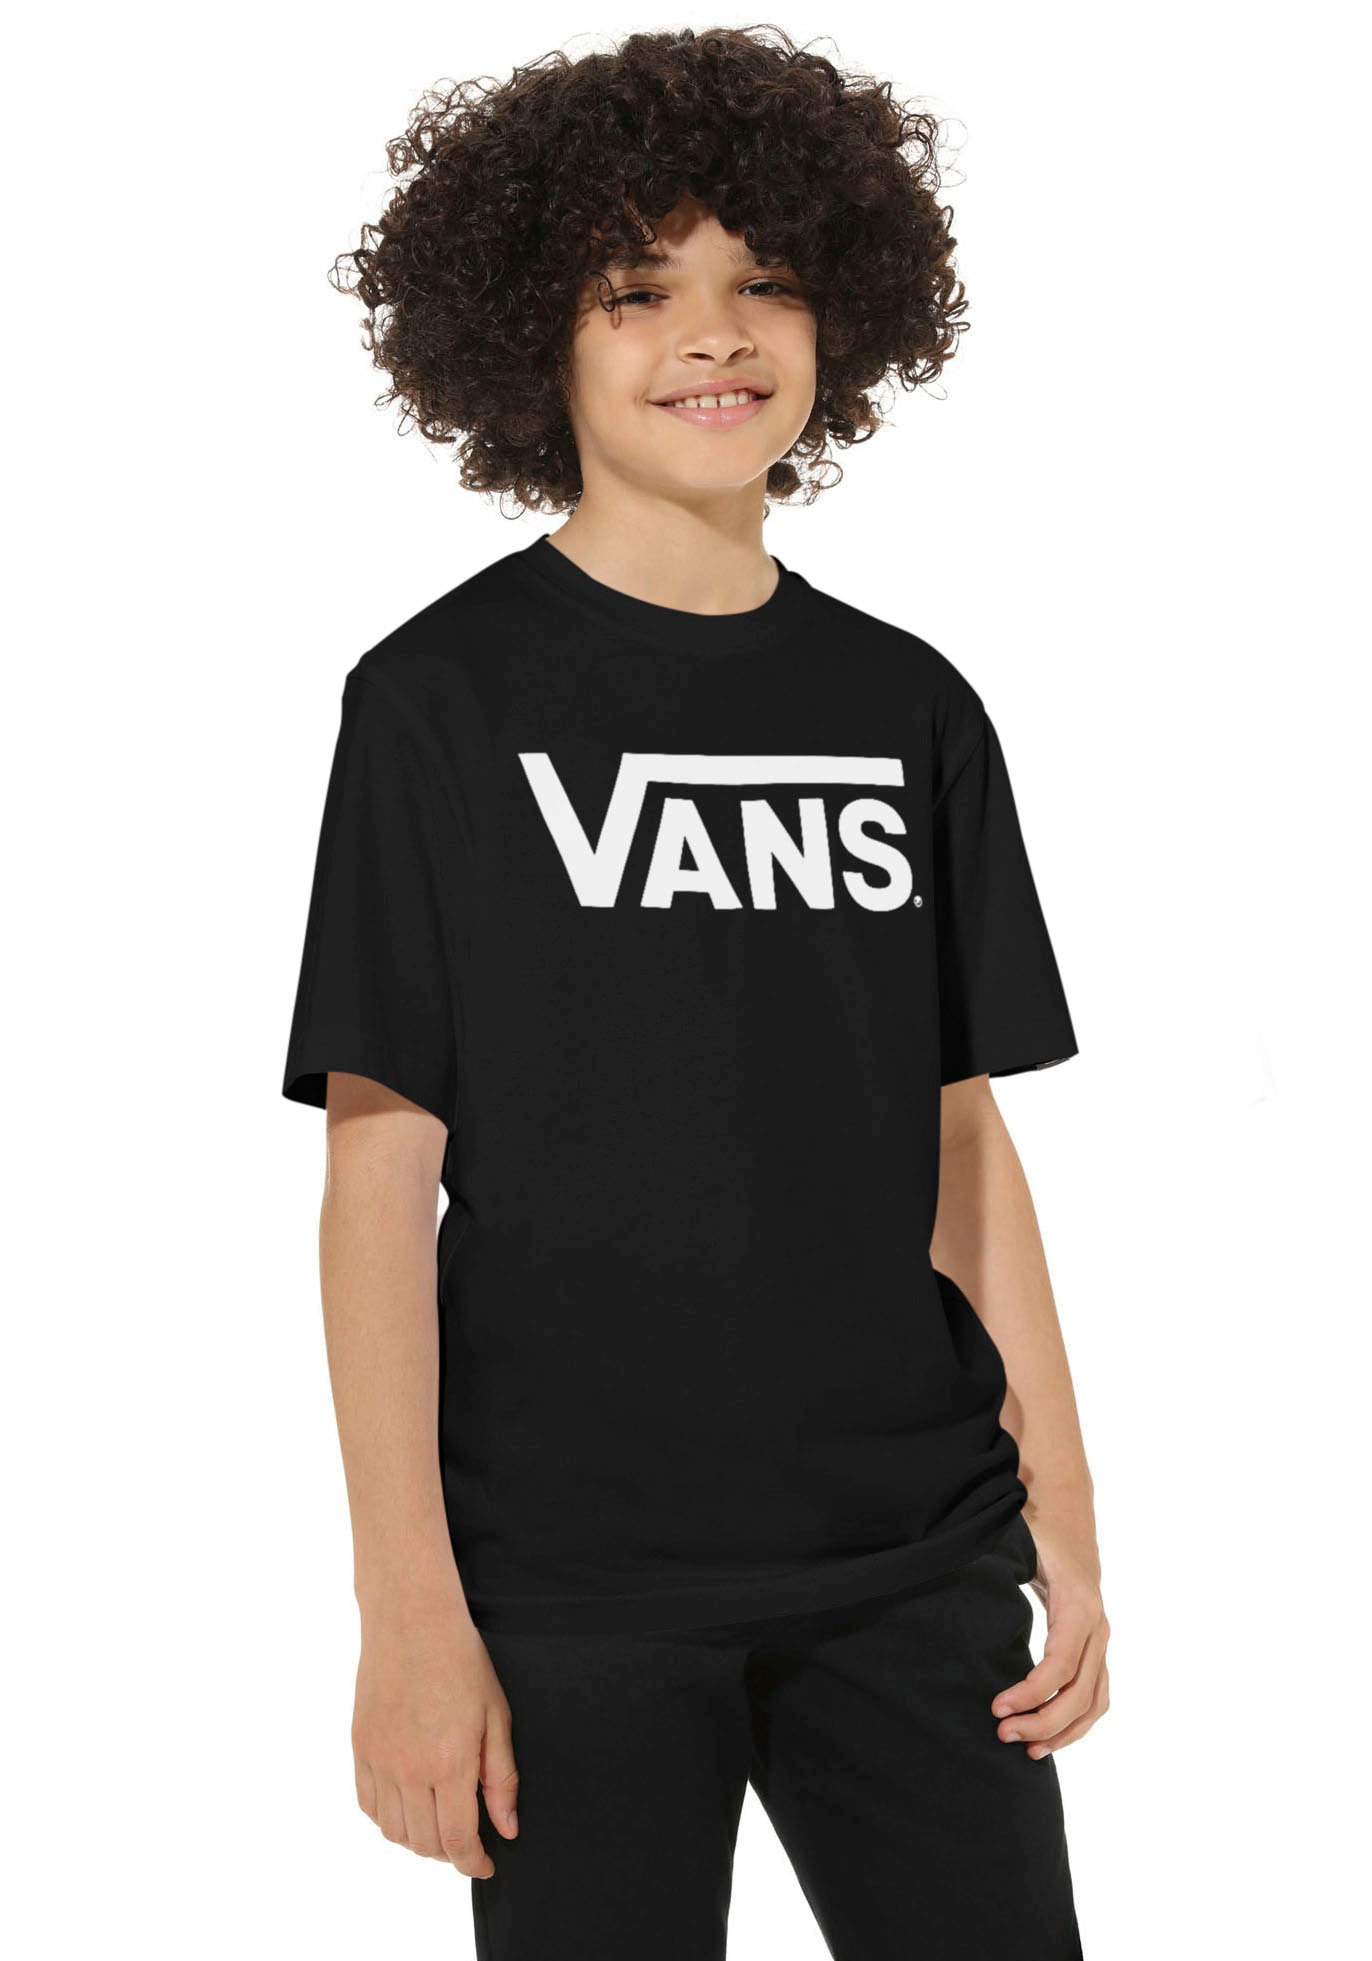 CLASSIC im T-Shirt BOYS« Vans »VANS %Sale jetzt